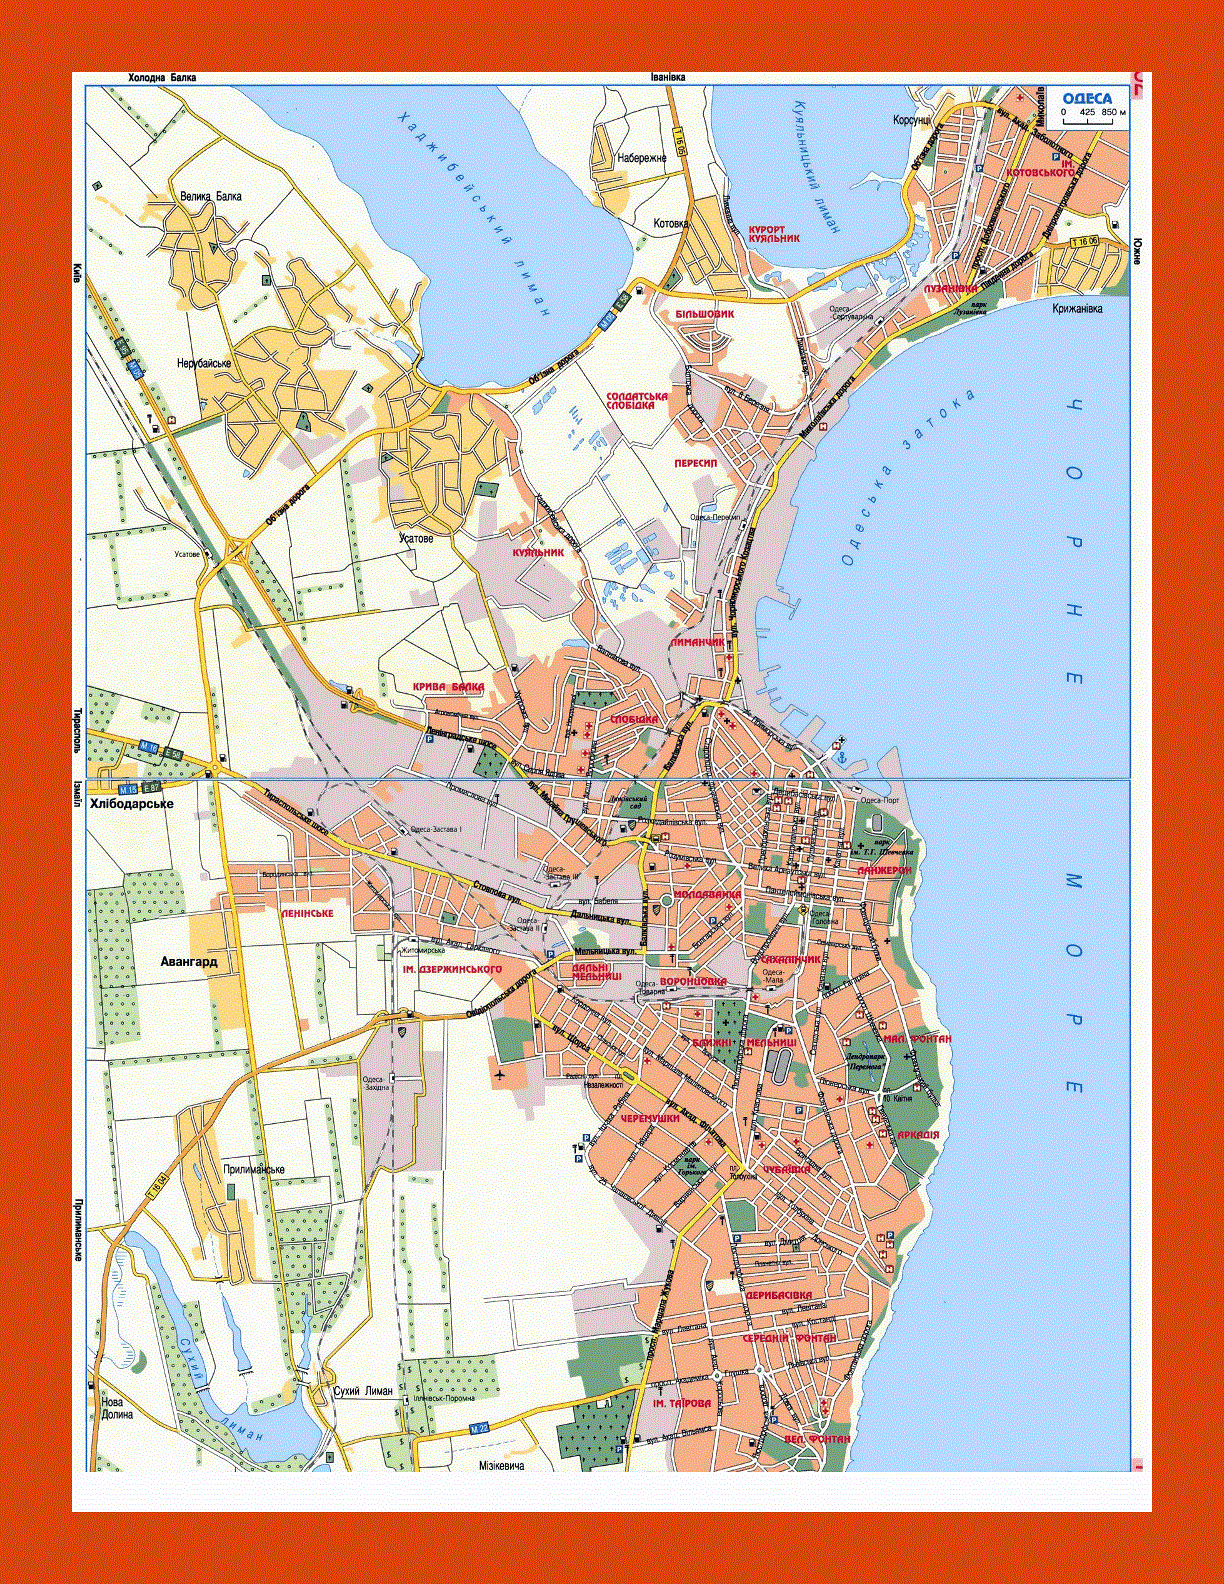 Road map of Odessa city in ukrainian